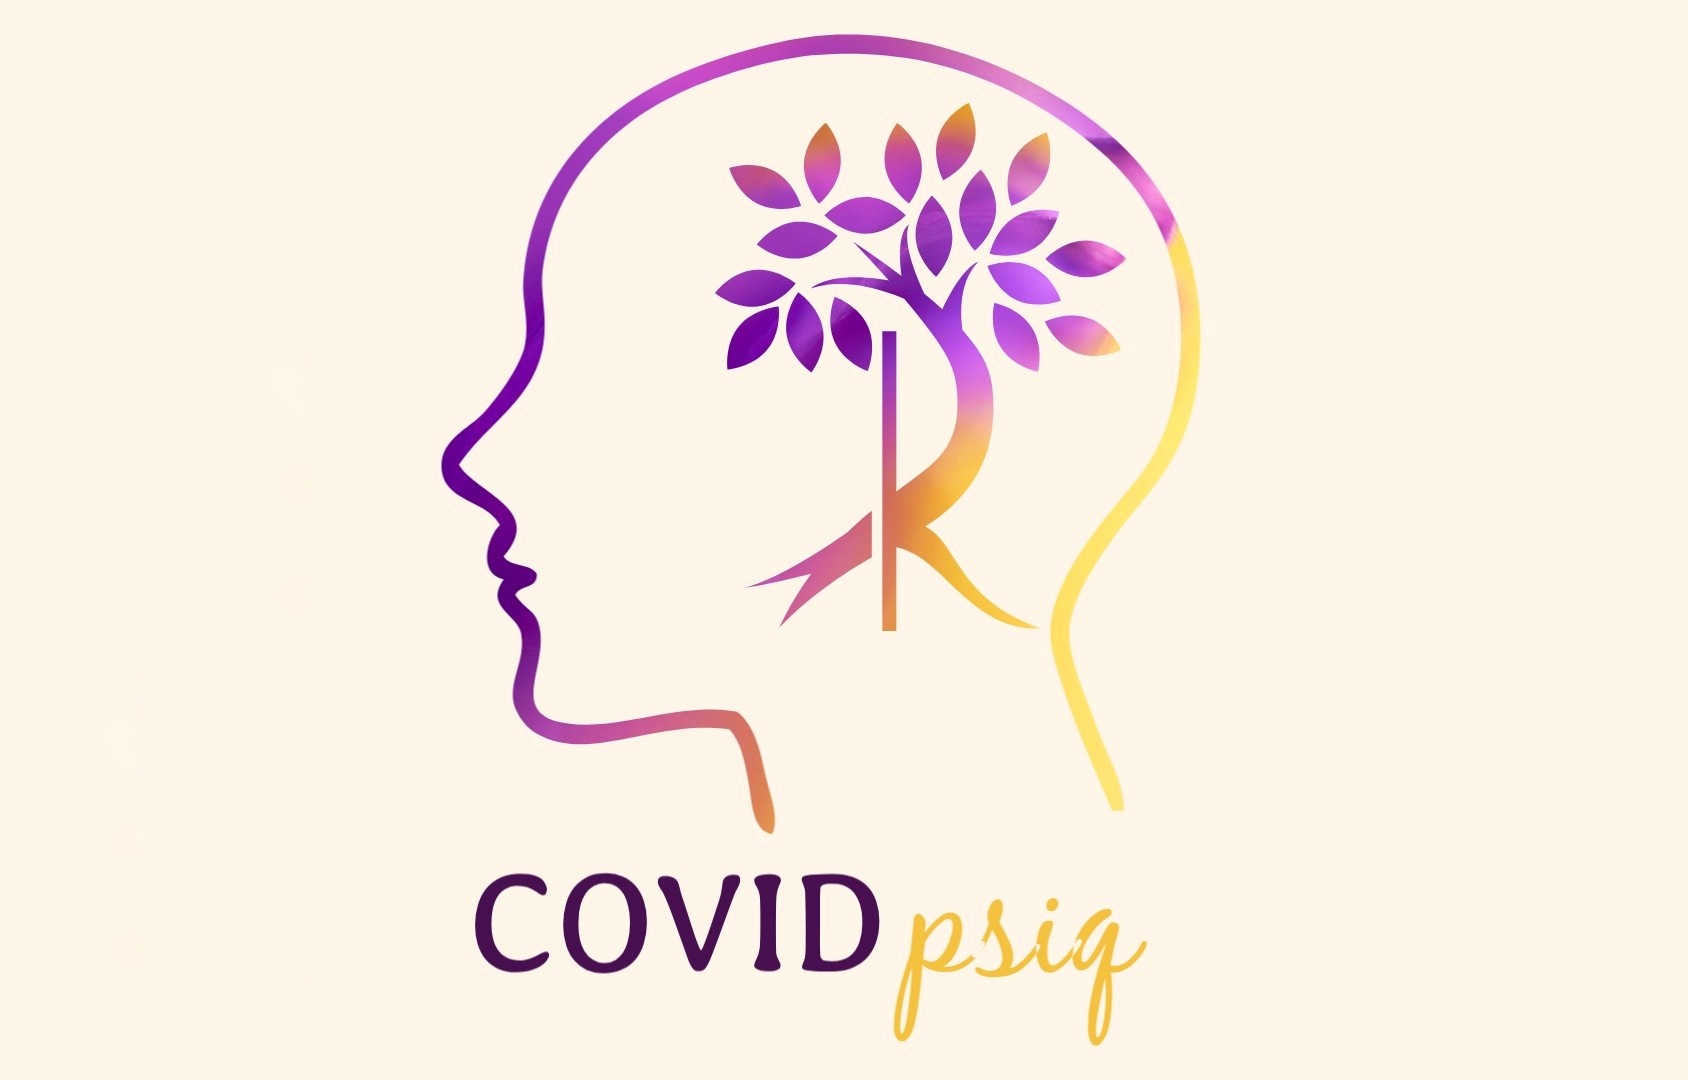 Pesquisa monitora saúde mental durante a pandemia de COVID-19